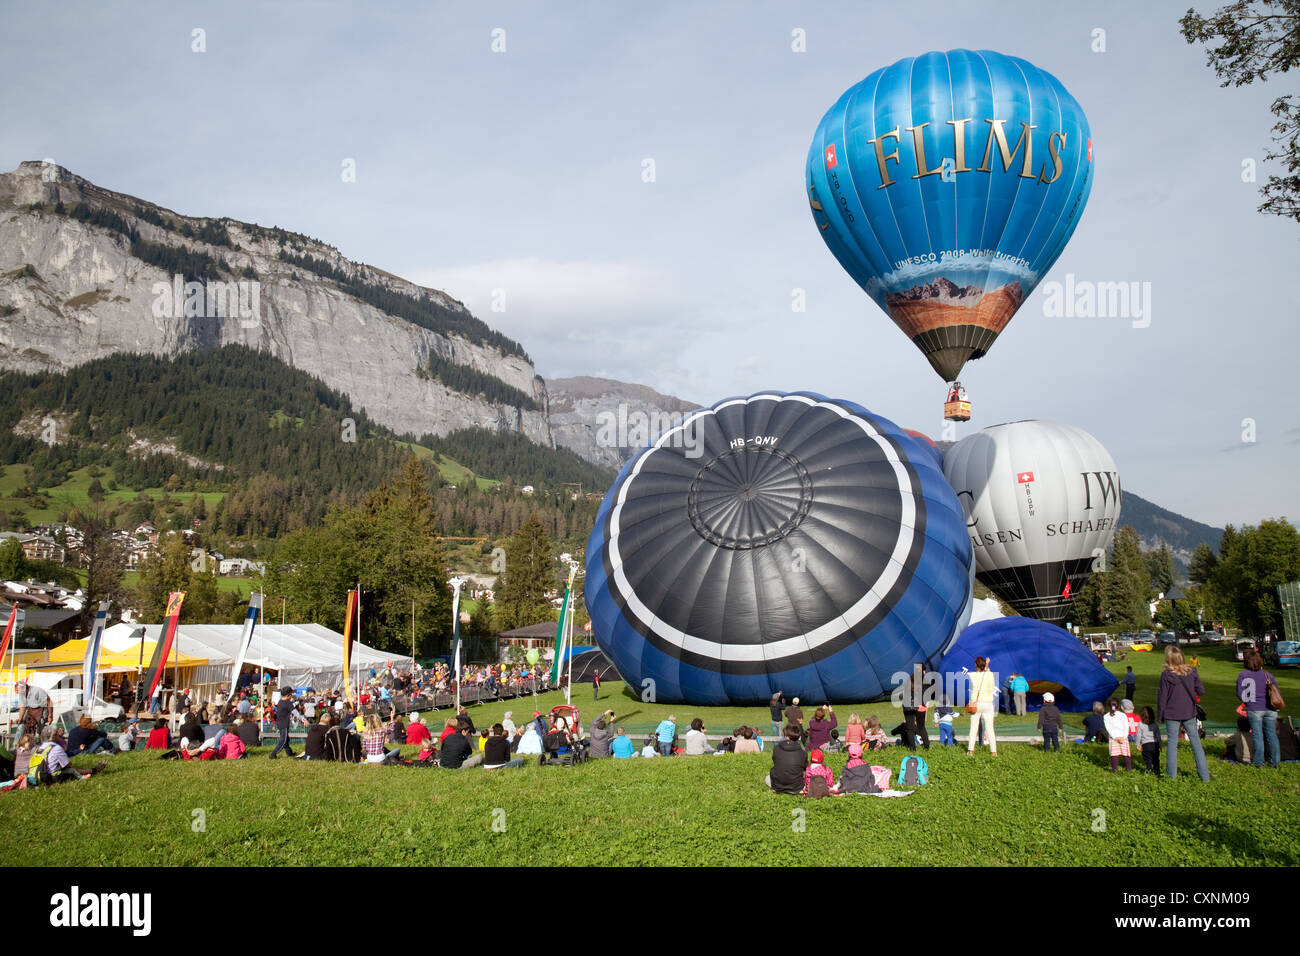 Hot air balloons at the Hot air balloon festival, Flims, Switzerland, Europe Stock Photo